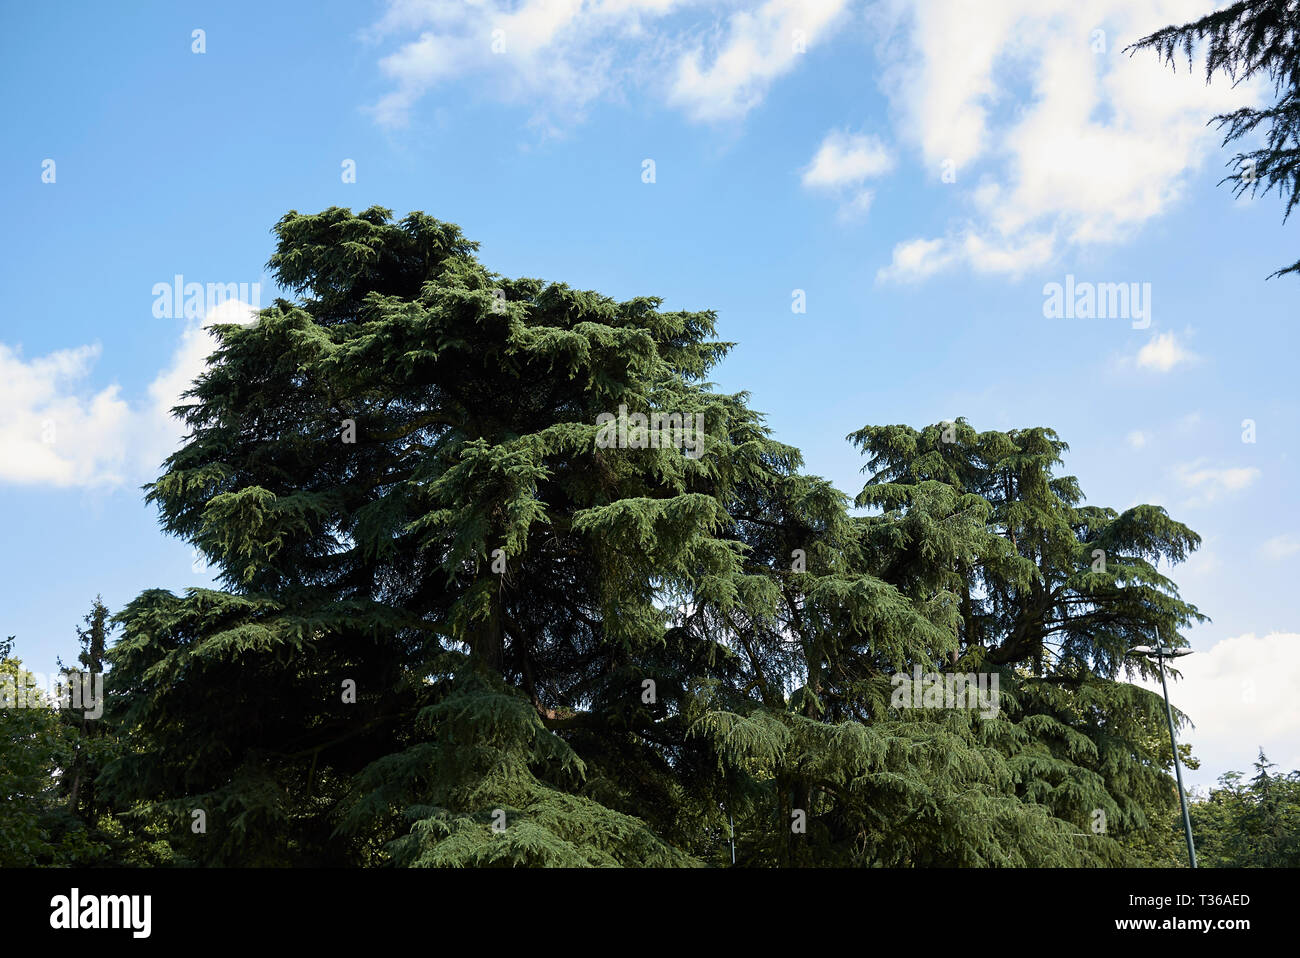 Cedrus libani trees in a public park Stock Photo